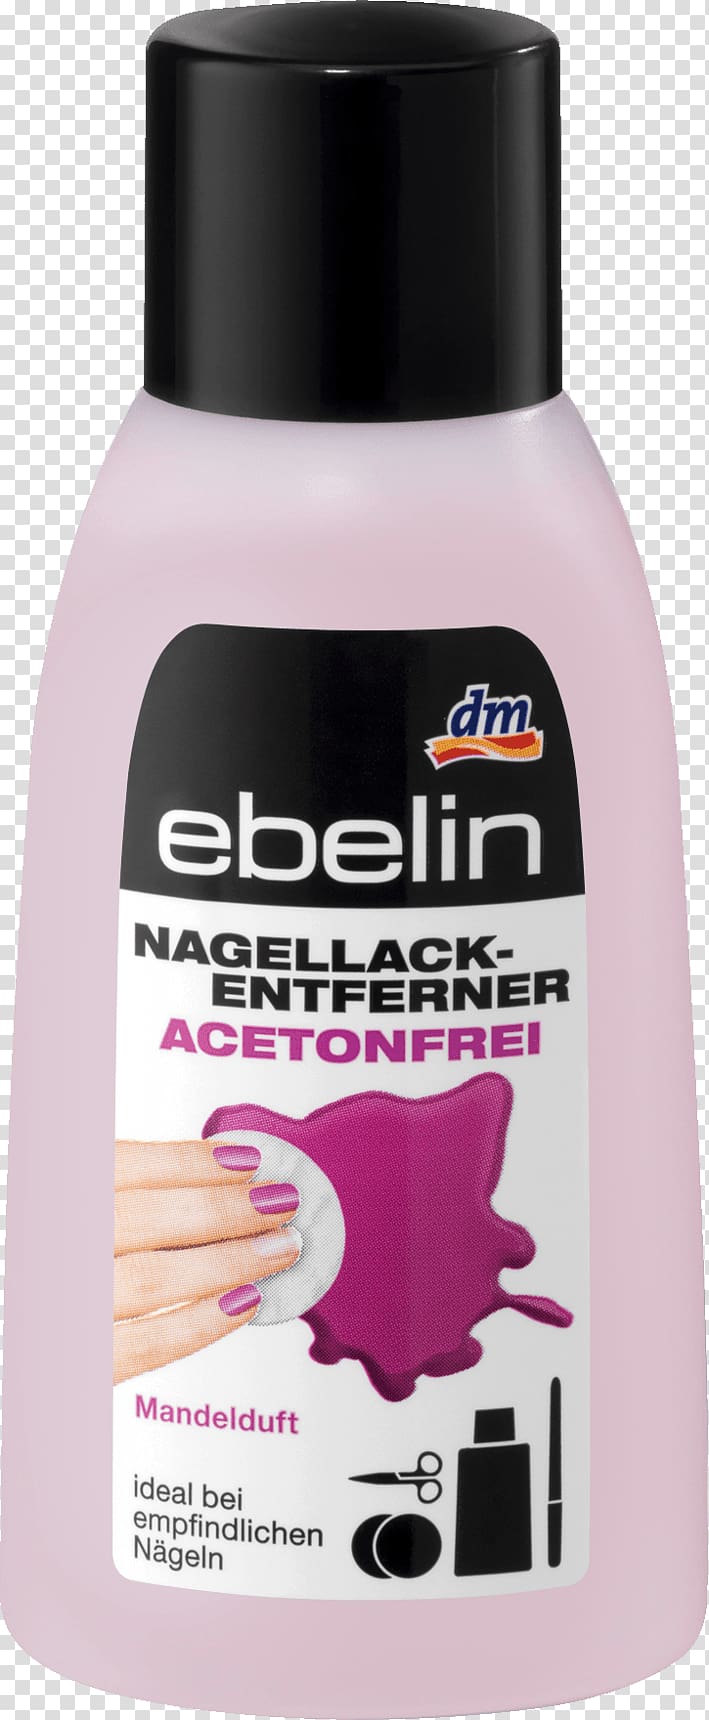 Nagellackentferner Acetone Nail Polish Cleanser, Nail transparent background PNG clipart